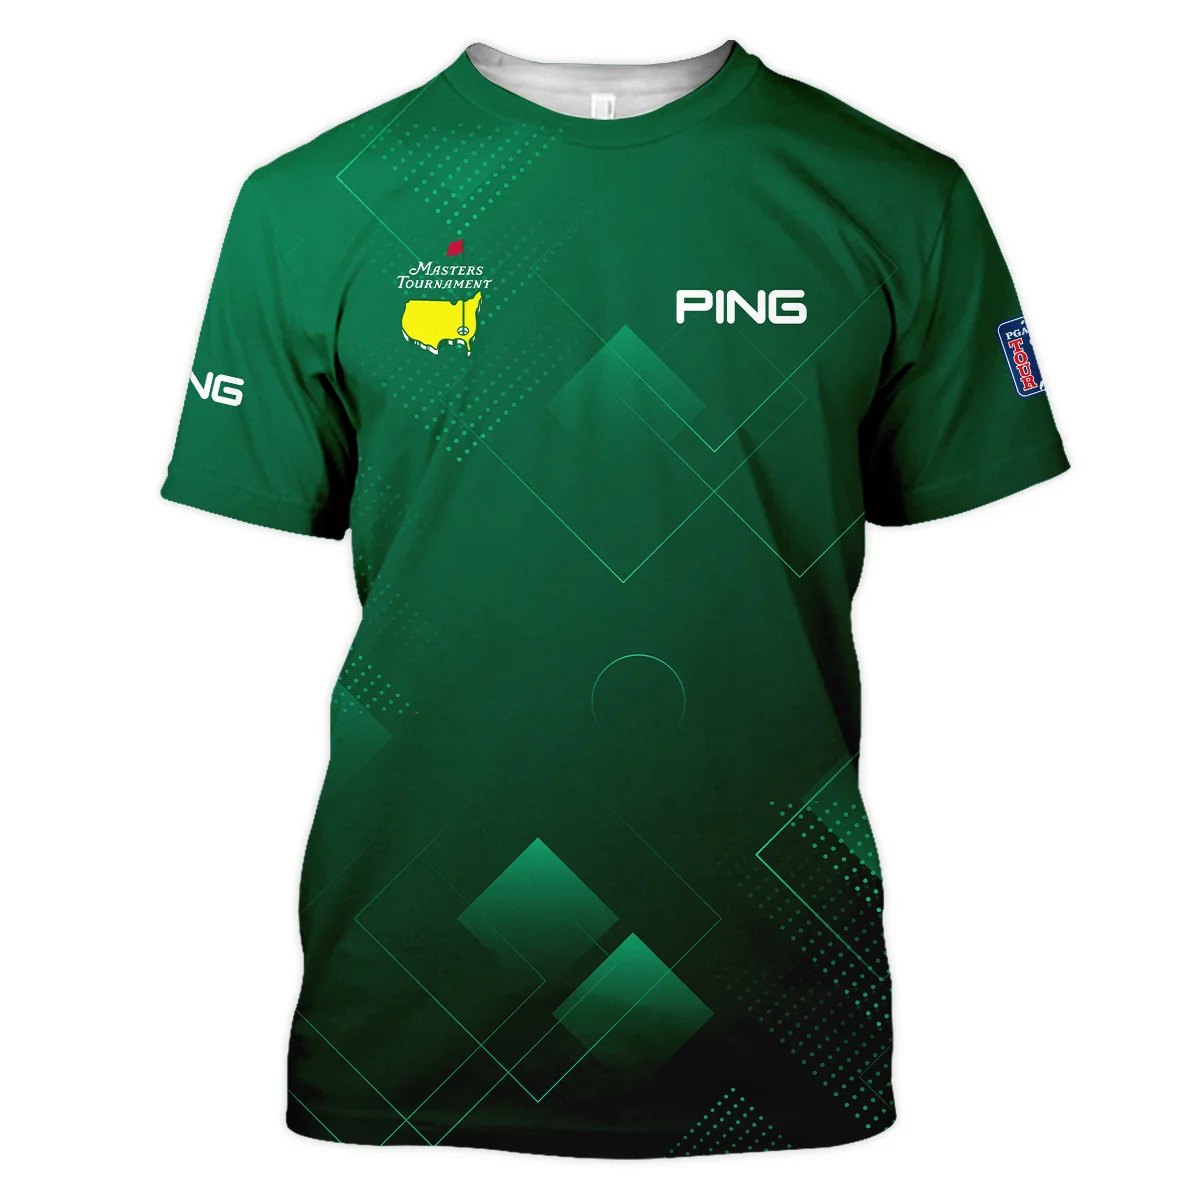 Masters Tournament Ping Unisex T-Shirt Golf Sports Green Abstract Geometric T-Shirt